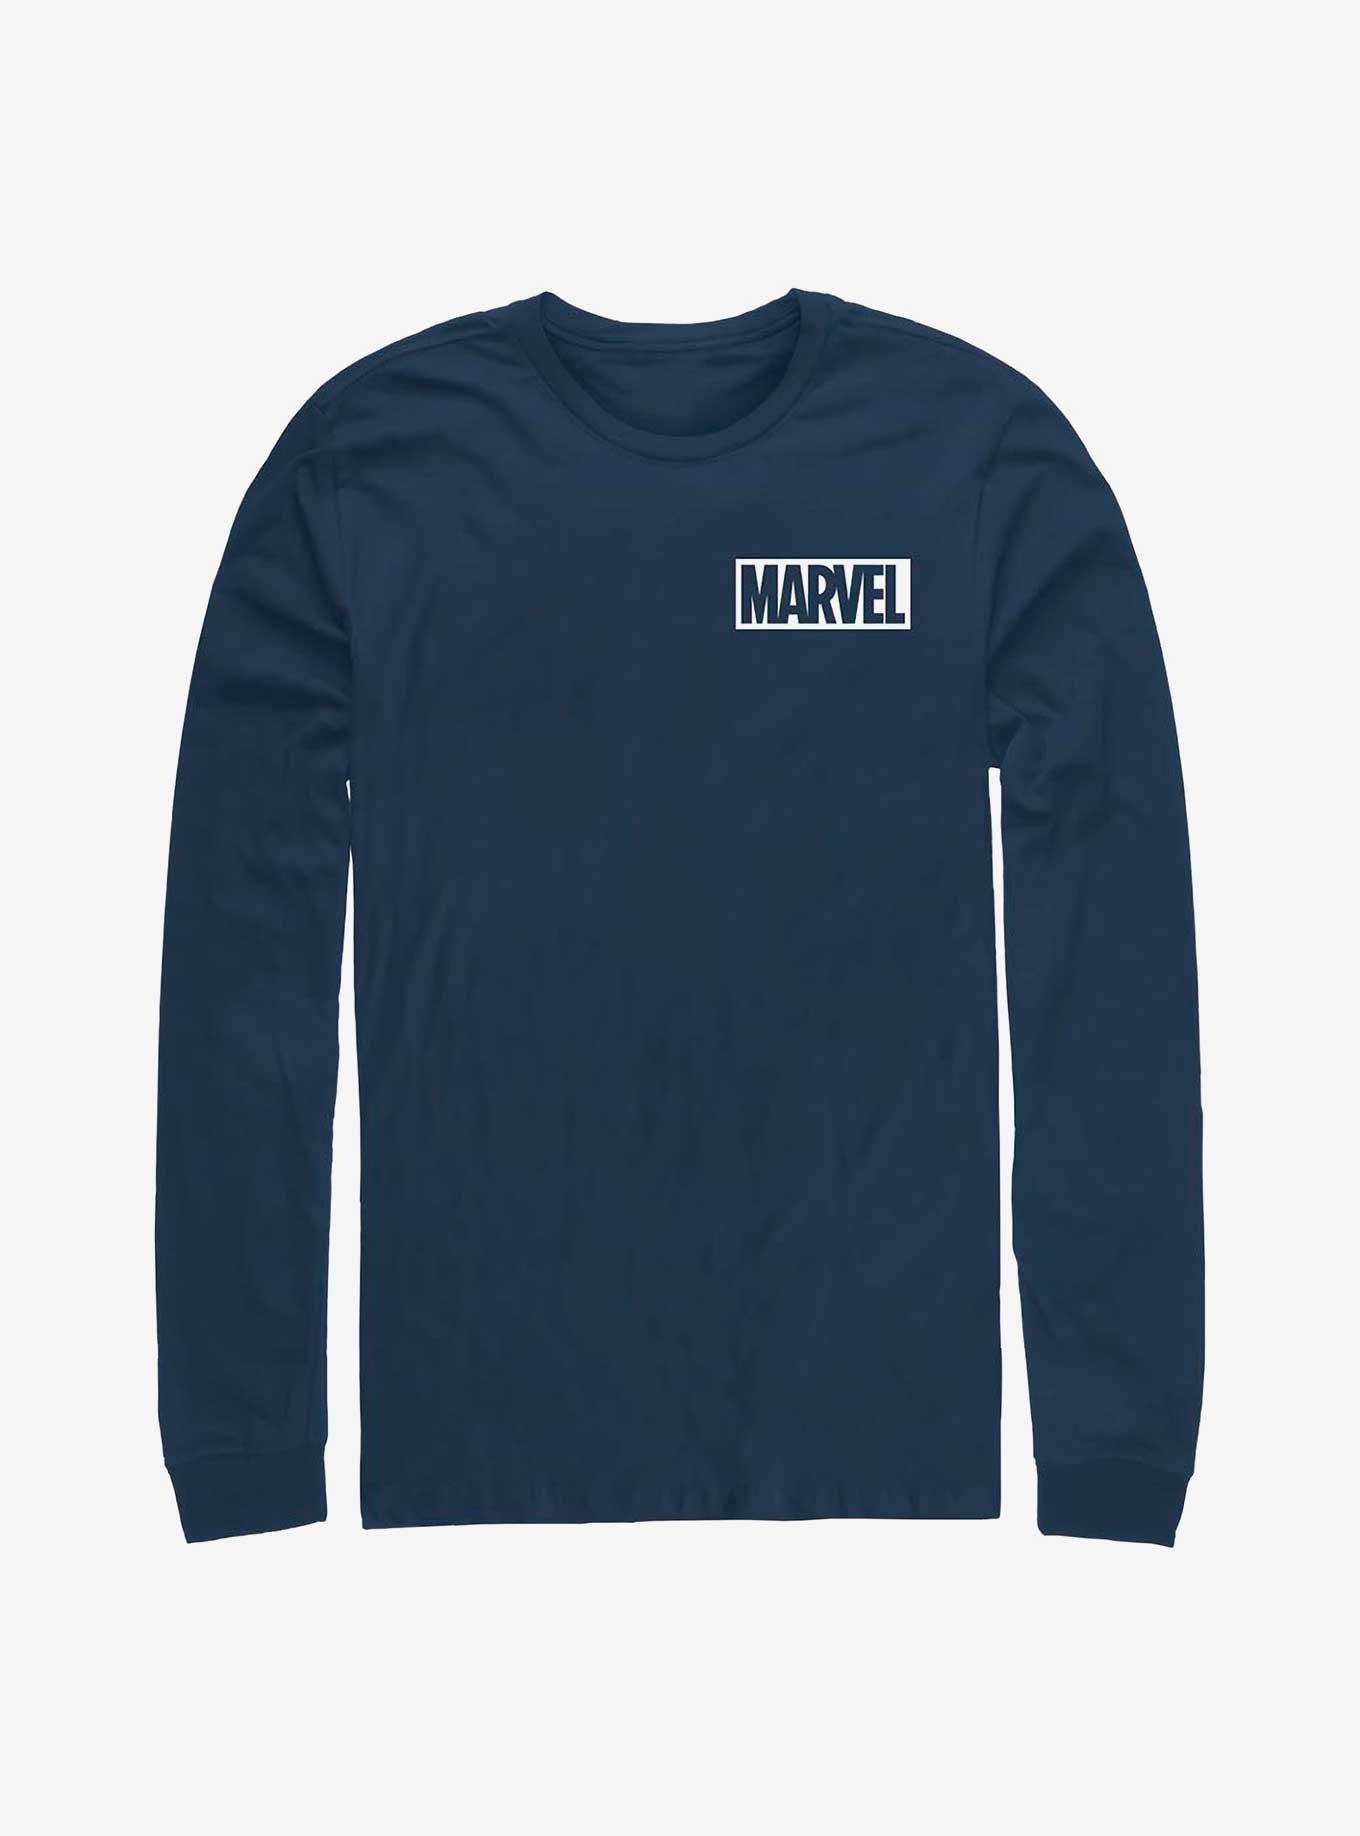 Marvel Pocket Logo Long-Sleeve T-Shirt, NAVY, hi-res